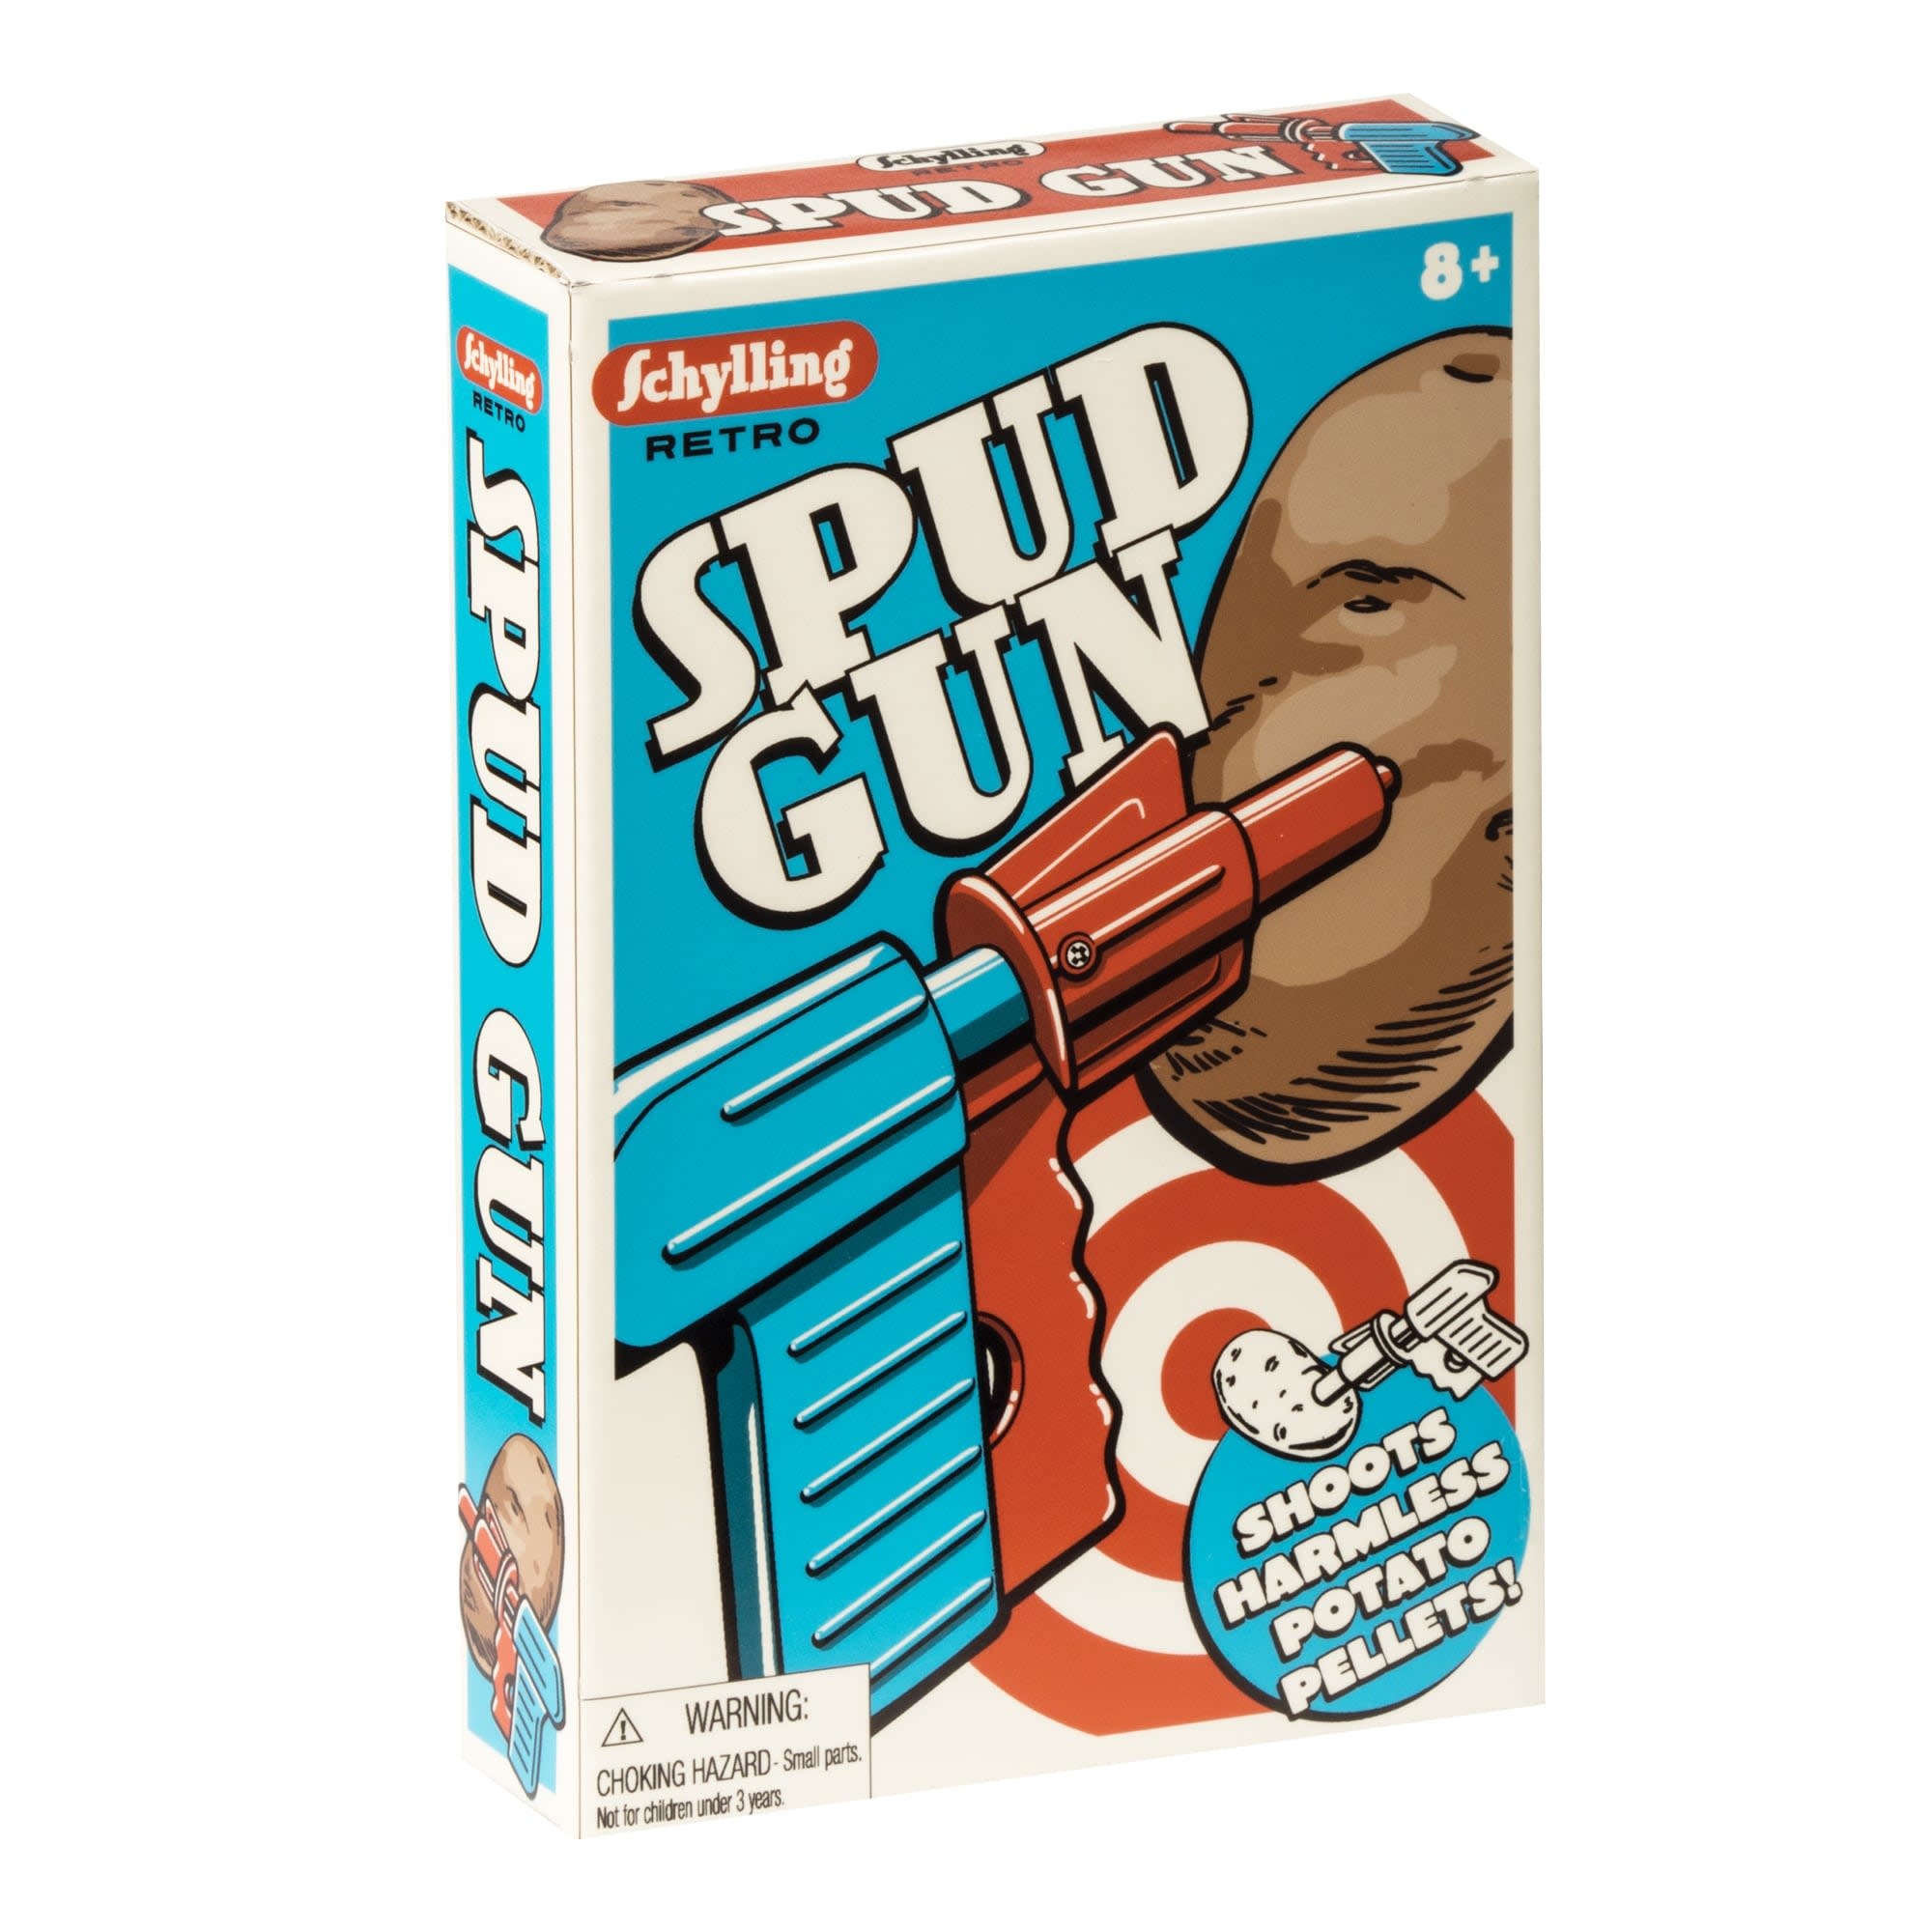 Schylling Retro Spud Gun (shoots real potato pellets!)